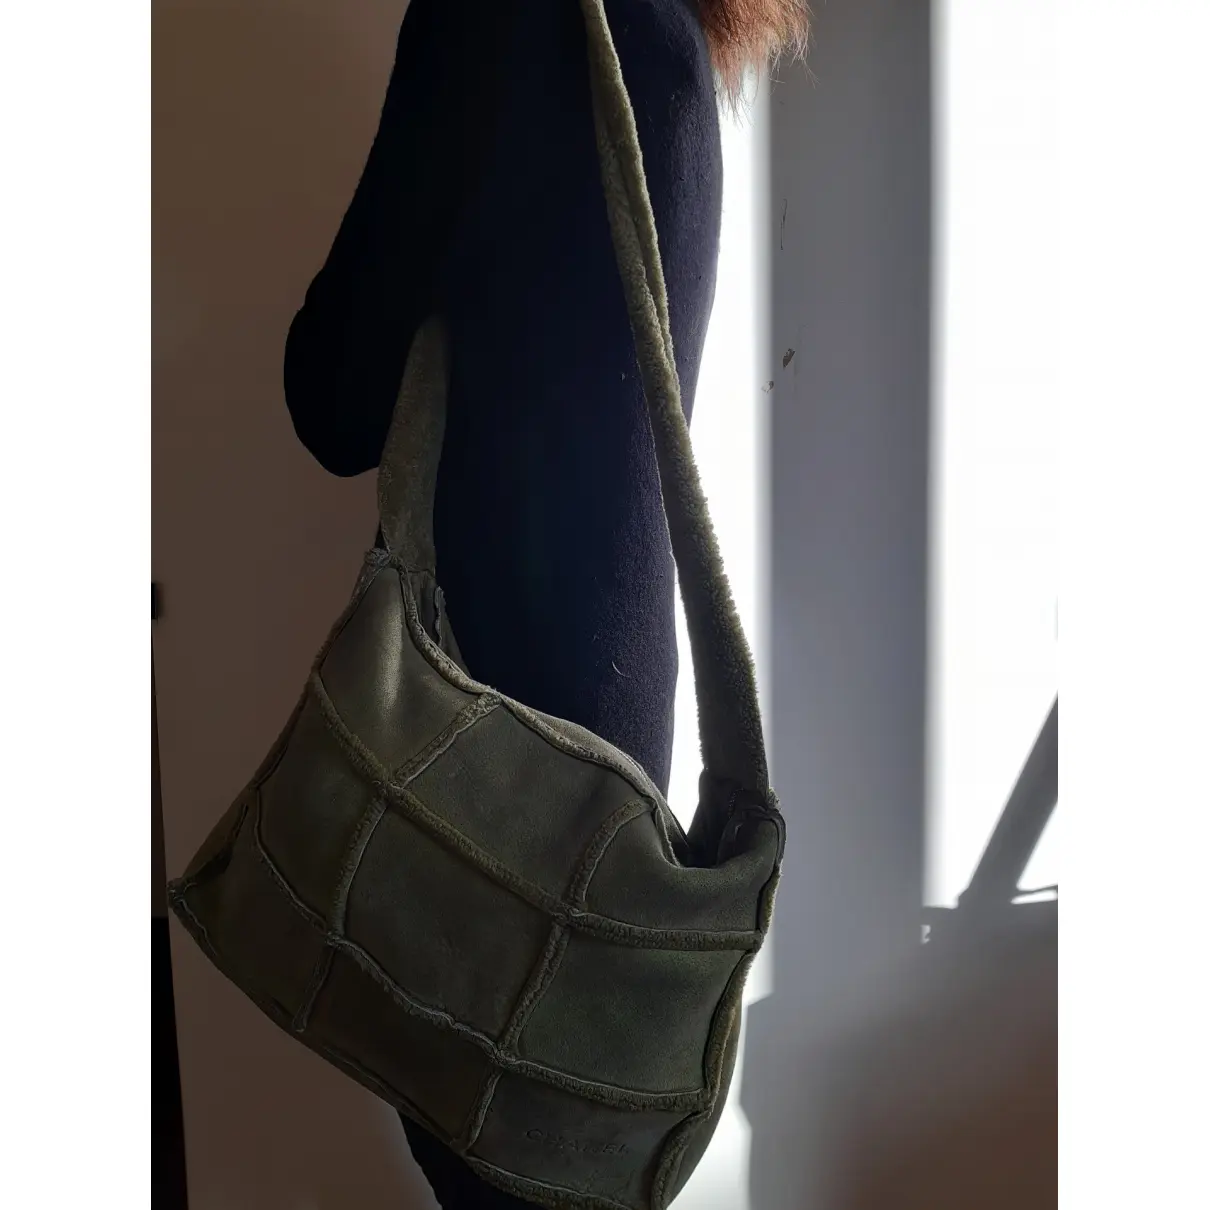 Buy Chanel Shearling crossbody bag online - Vintage